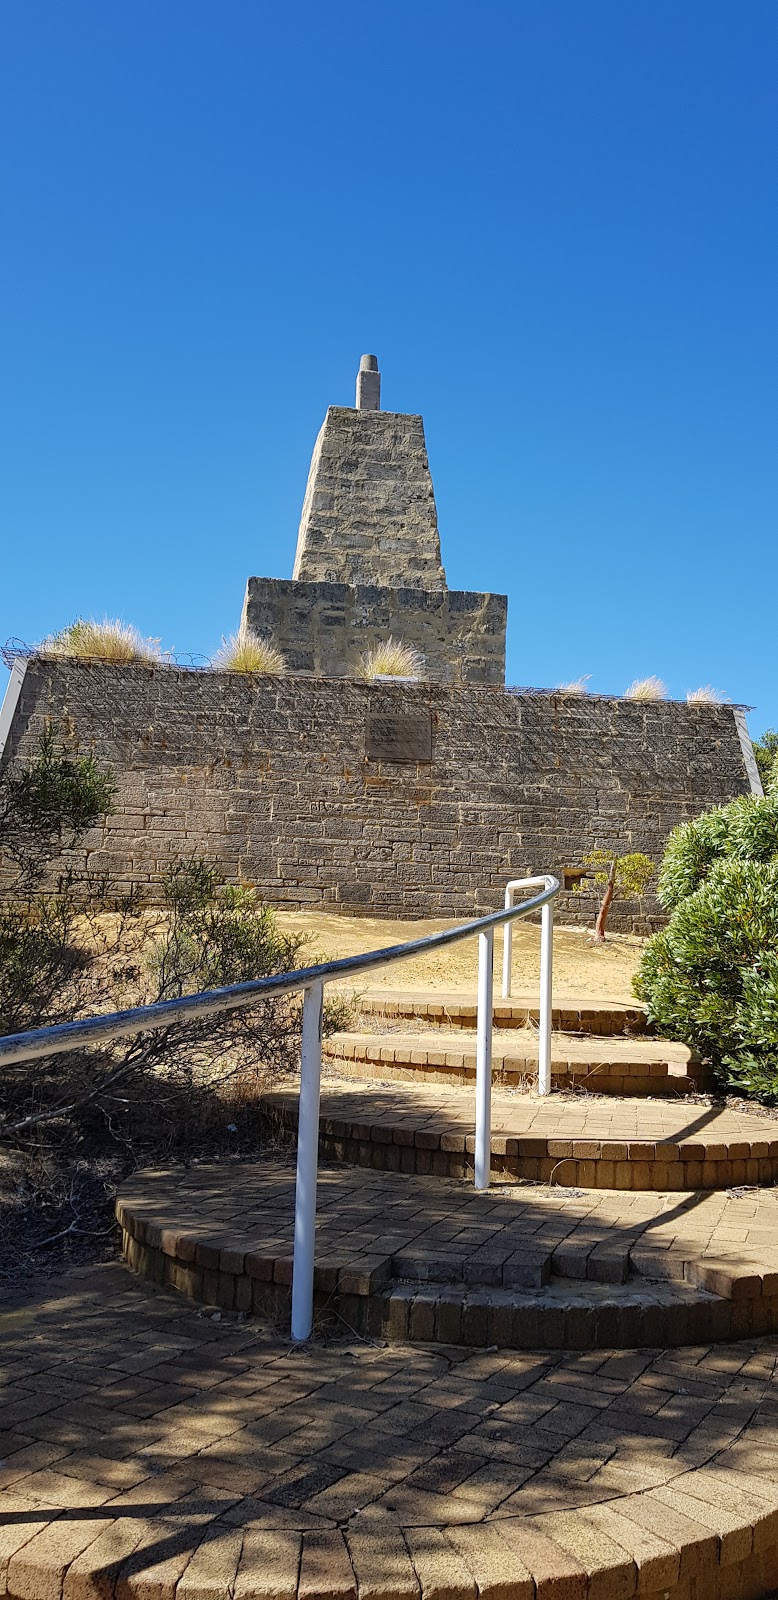 Buckland Hill Obelisk | LOT 436 Boundary Rd, Mosman Park WA 6012, Australia